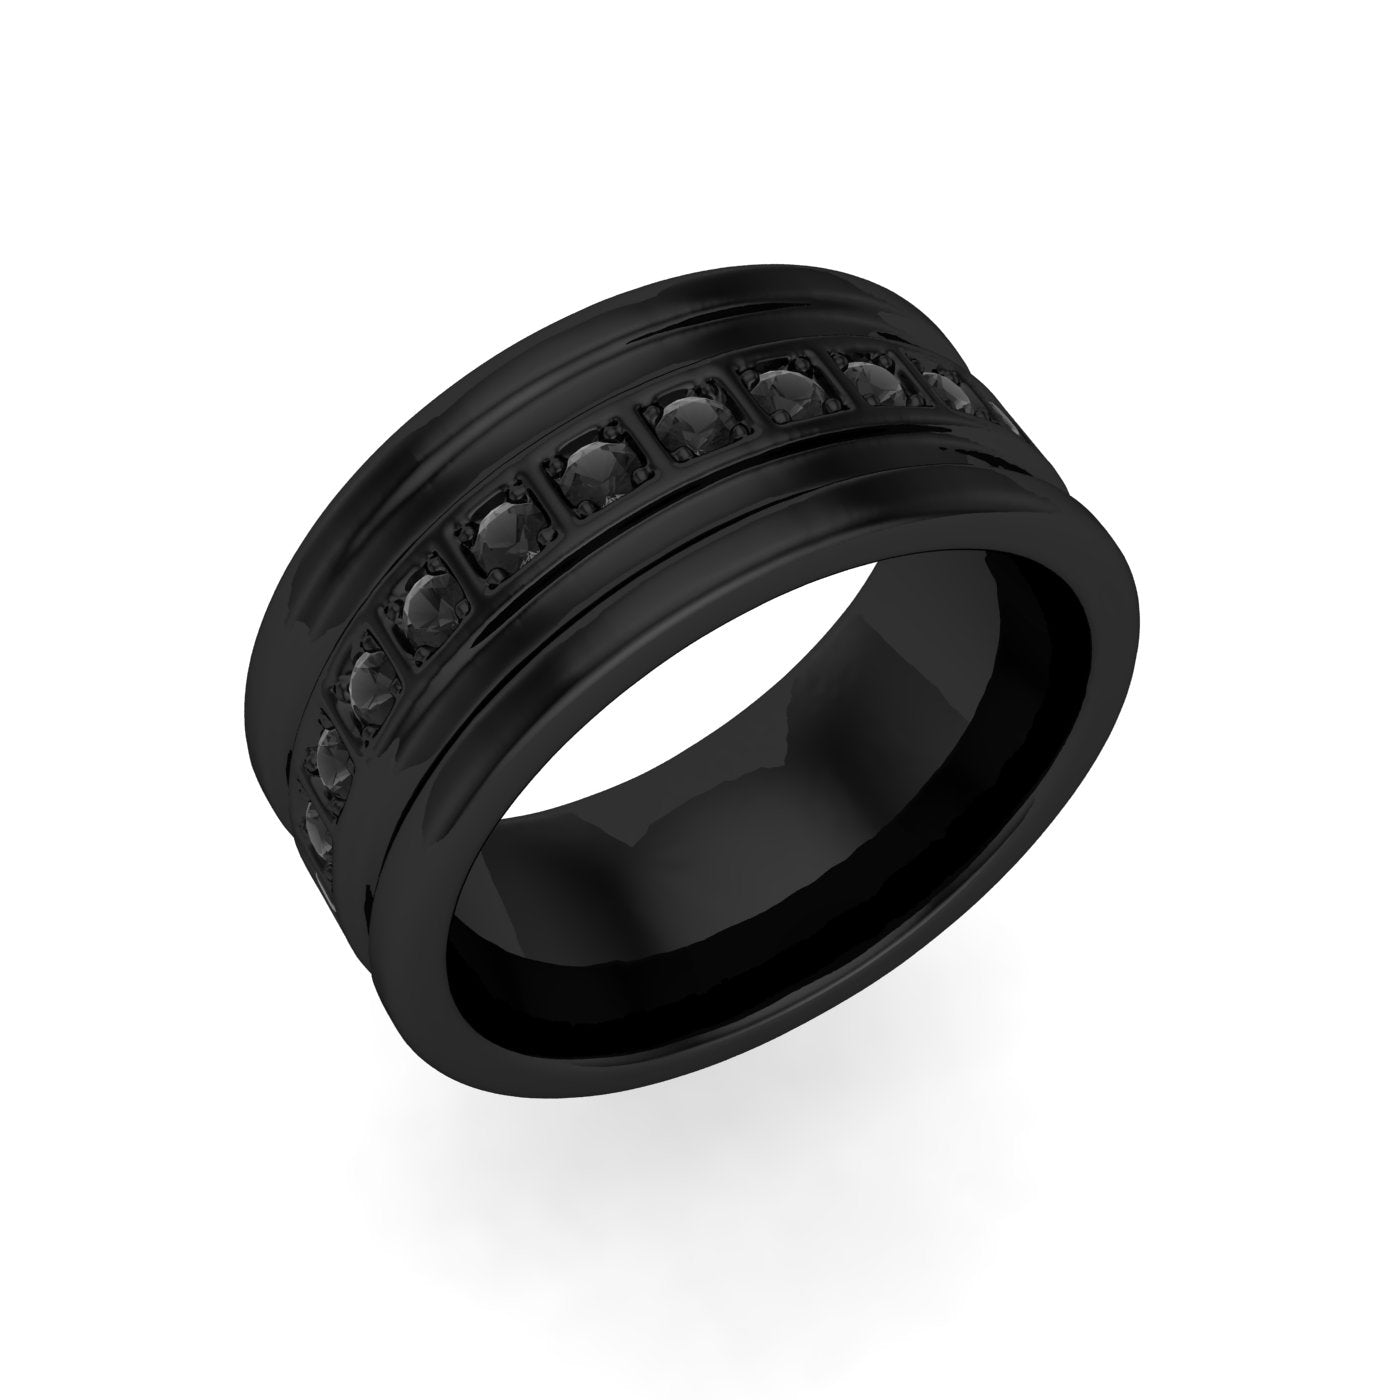 Men's Black Ceramic Wedding or Engagement Ring - 8mm Width